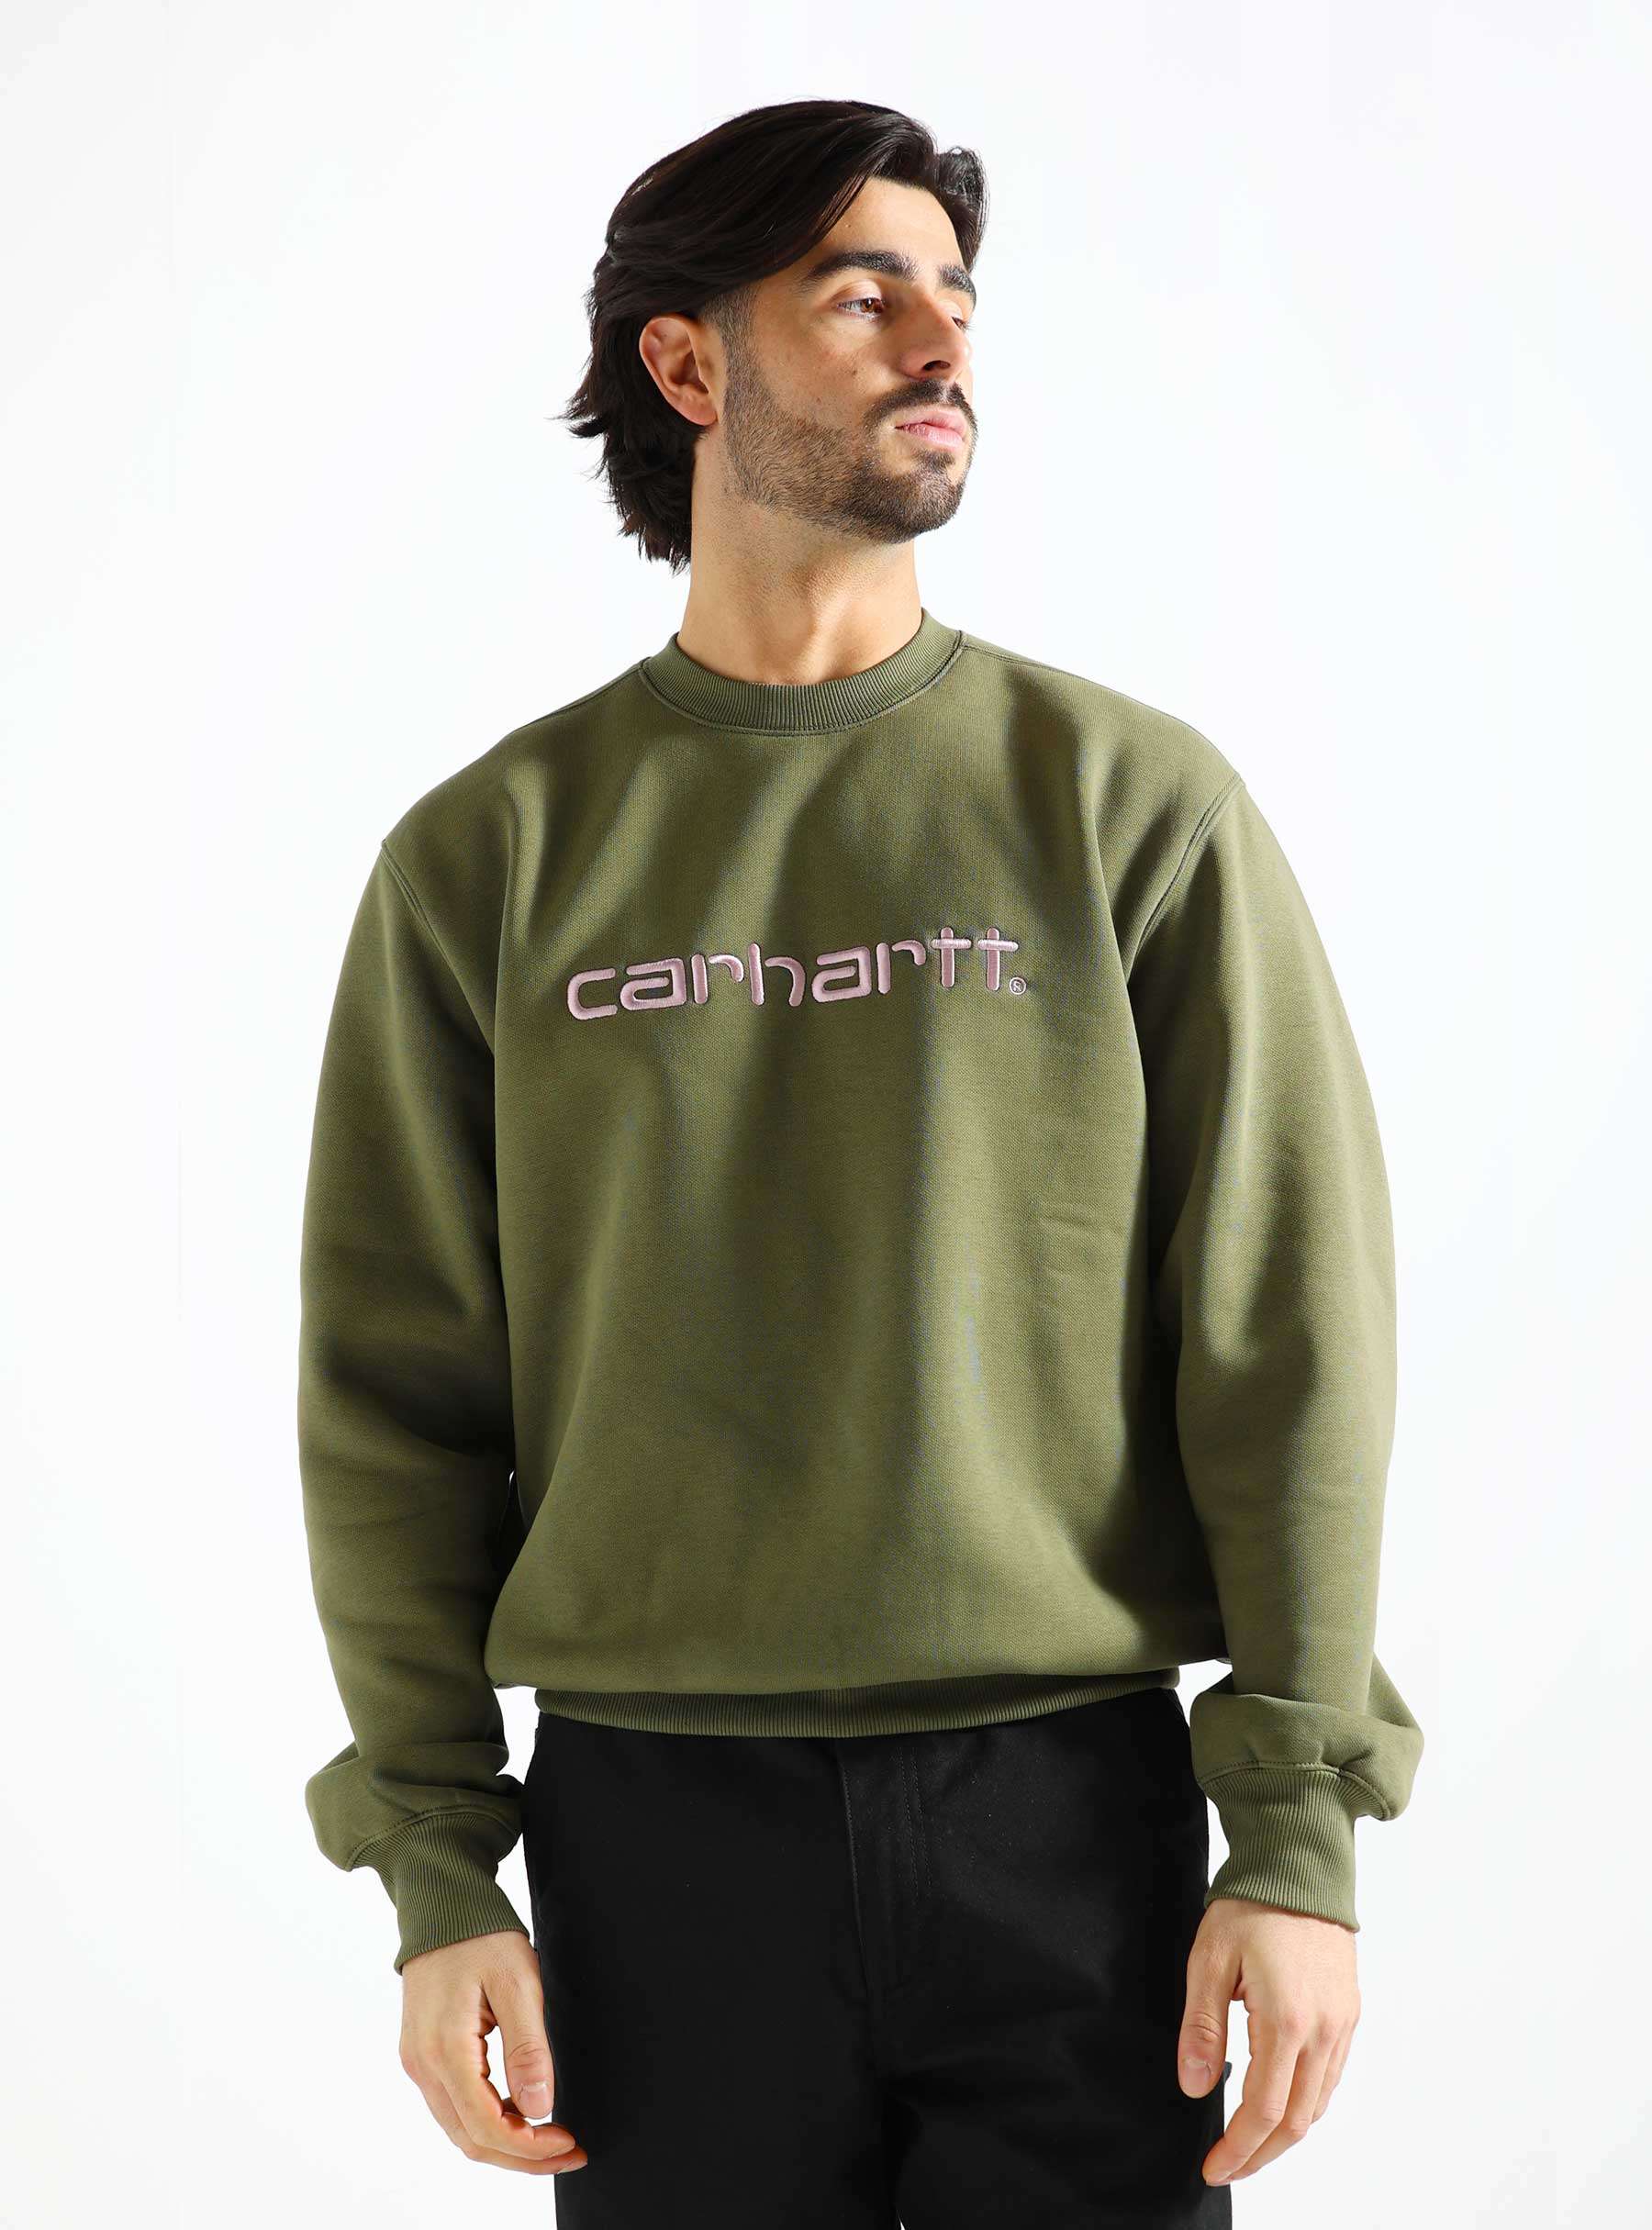 Carhartt Sweater Dundee Glassy Pink I030546-24DXX